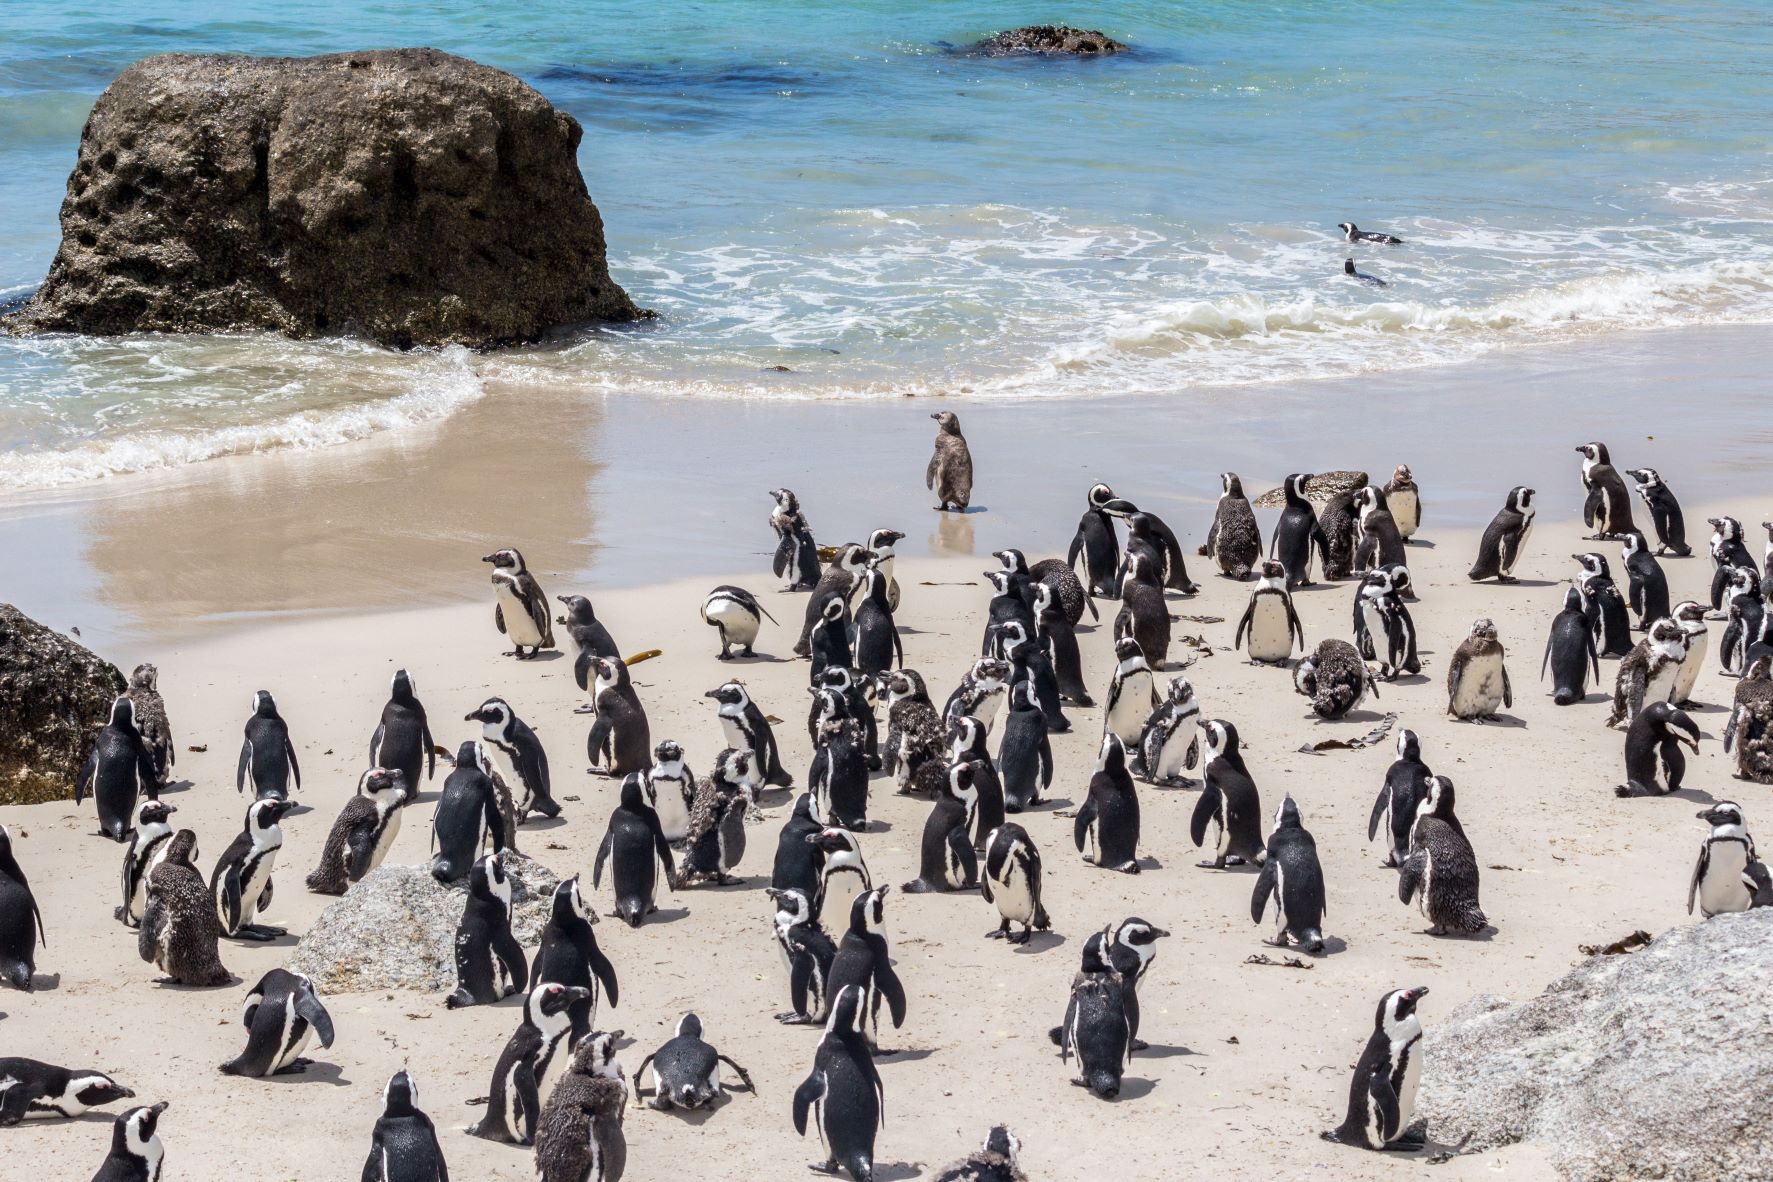 Swim with penguins